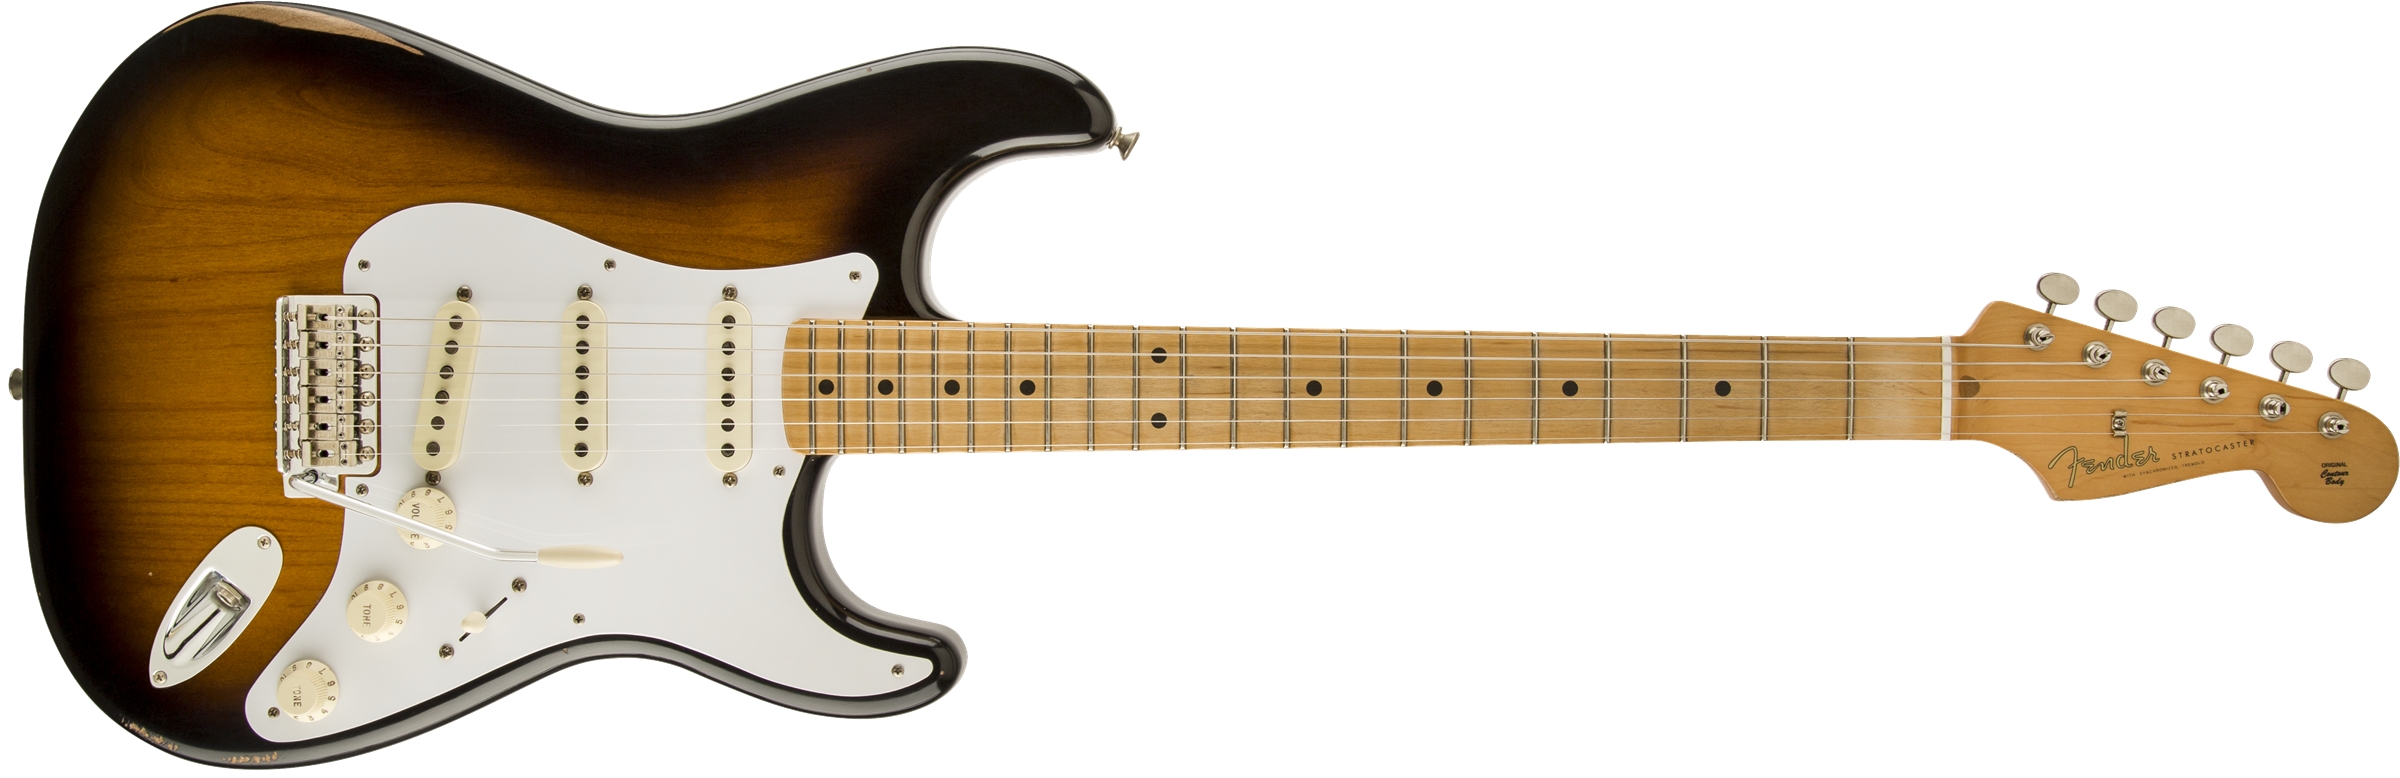 Road Worn '50s Stratocaster Fender - Audiofanzine